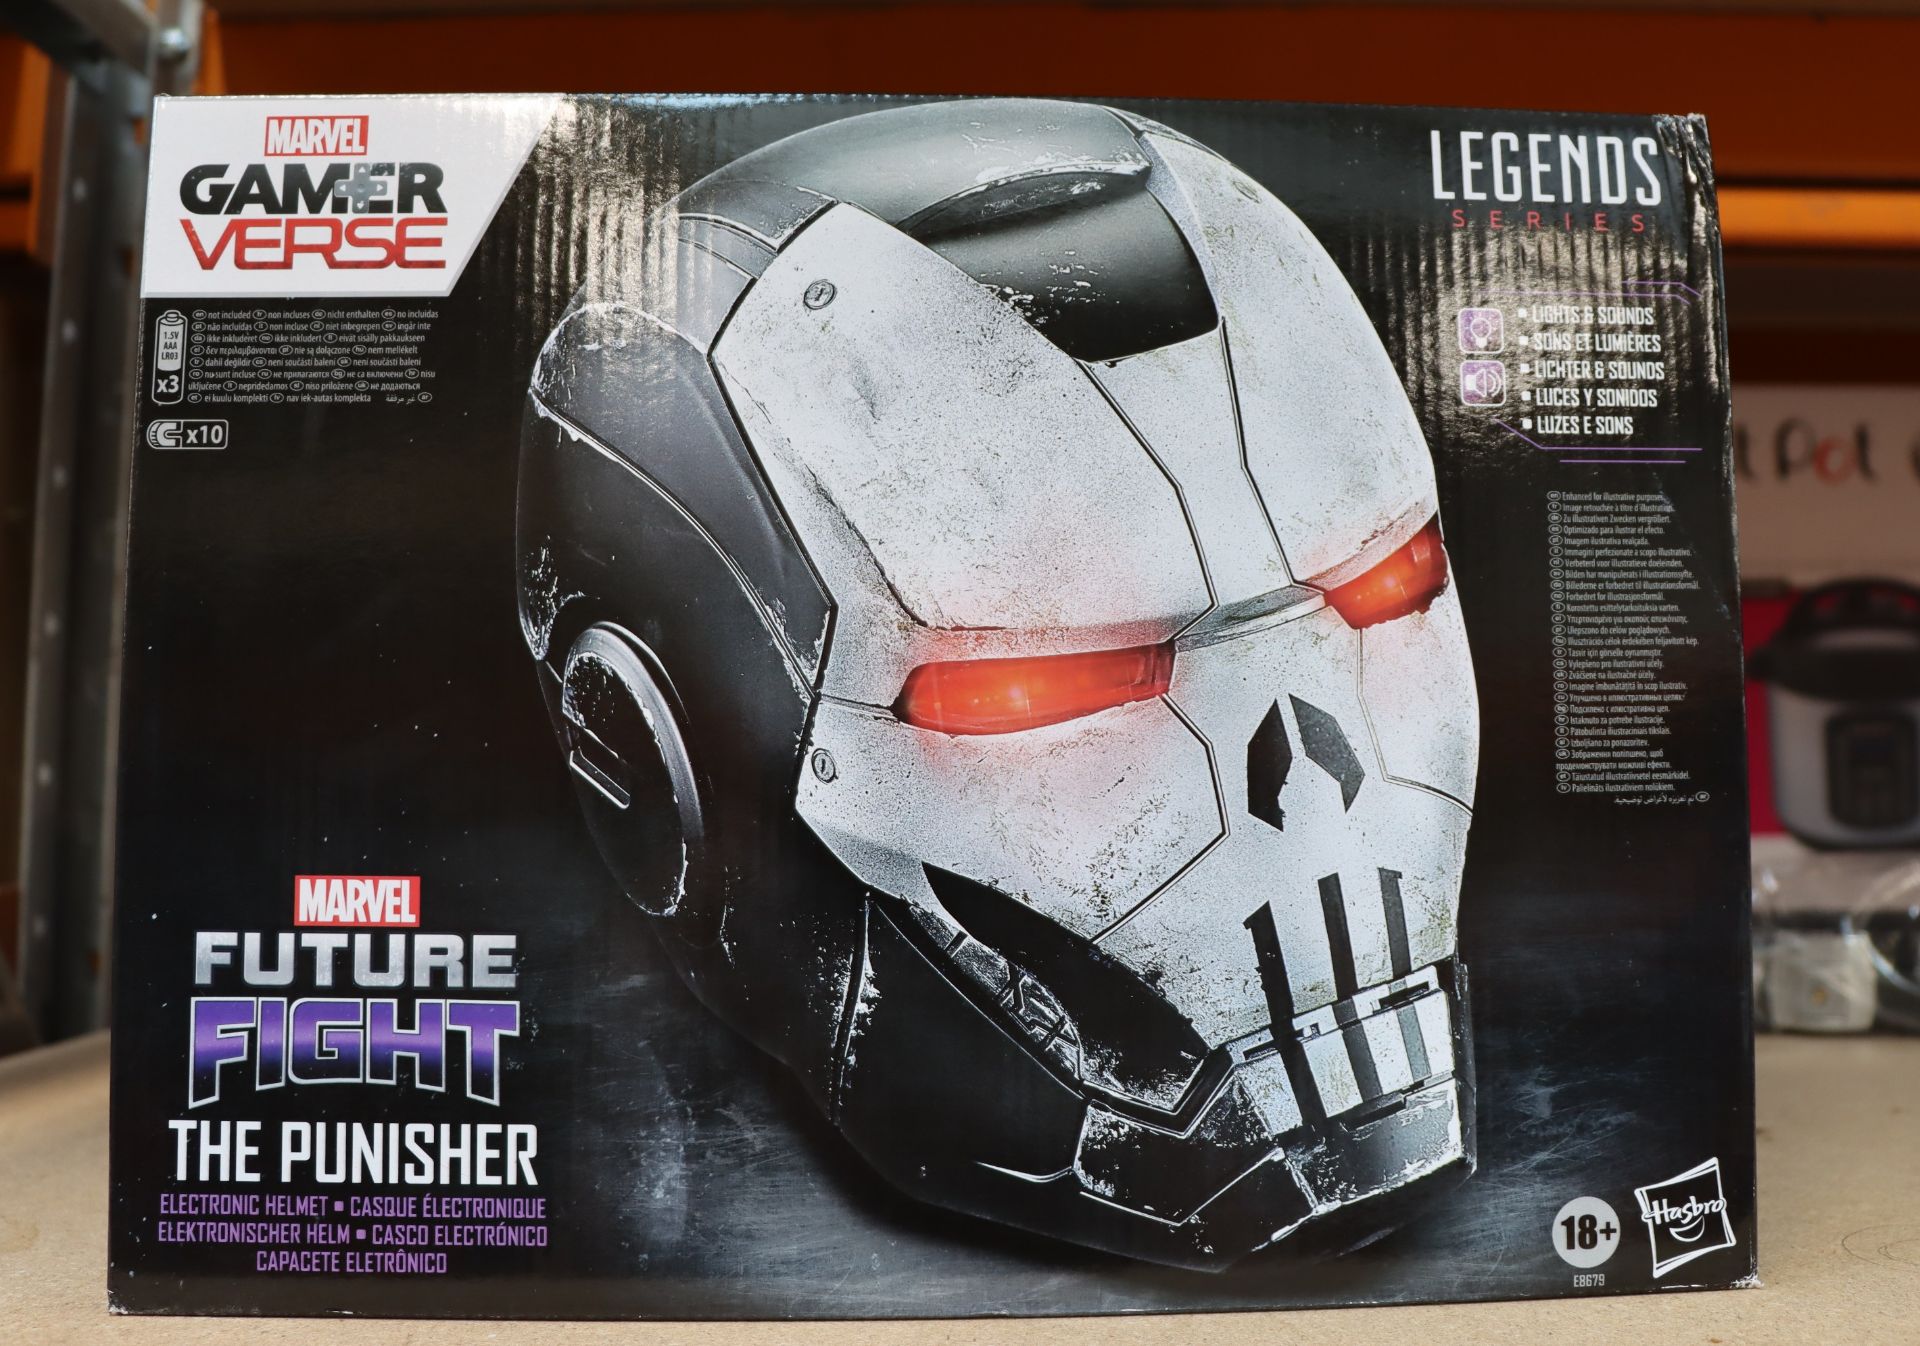 One as new Marvel Legends Punisher Gamer Verse electronic helmet.